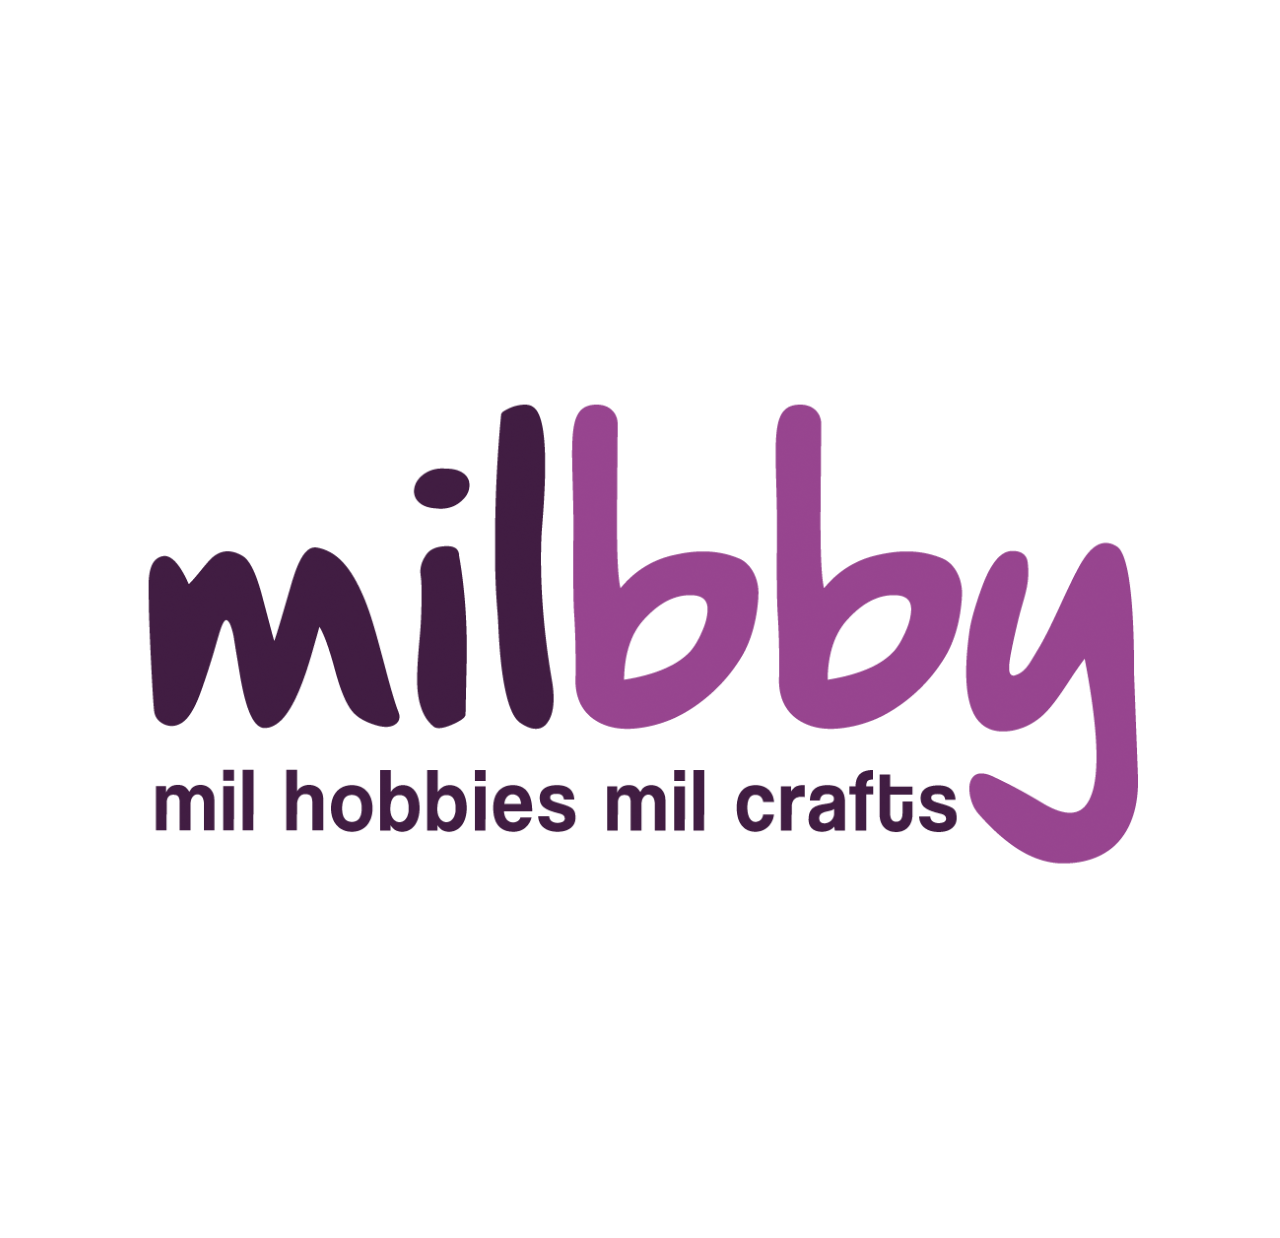 Milbby